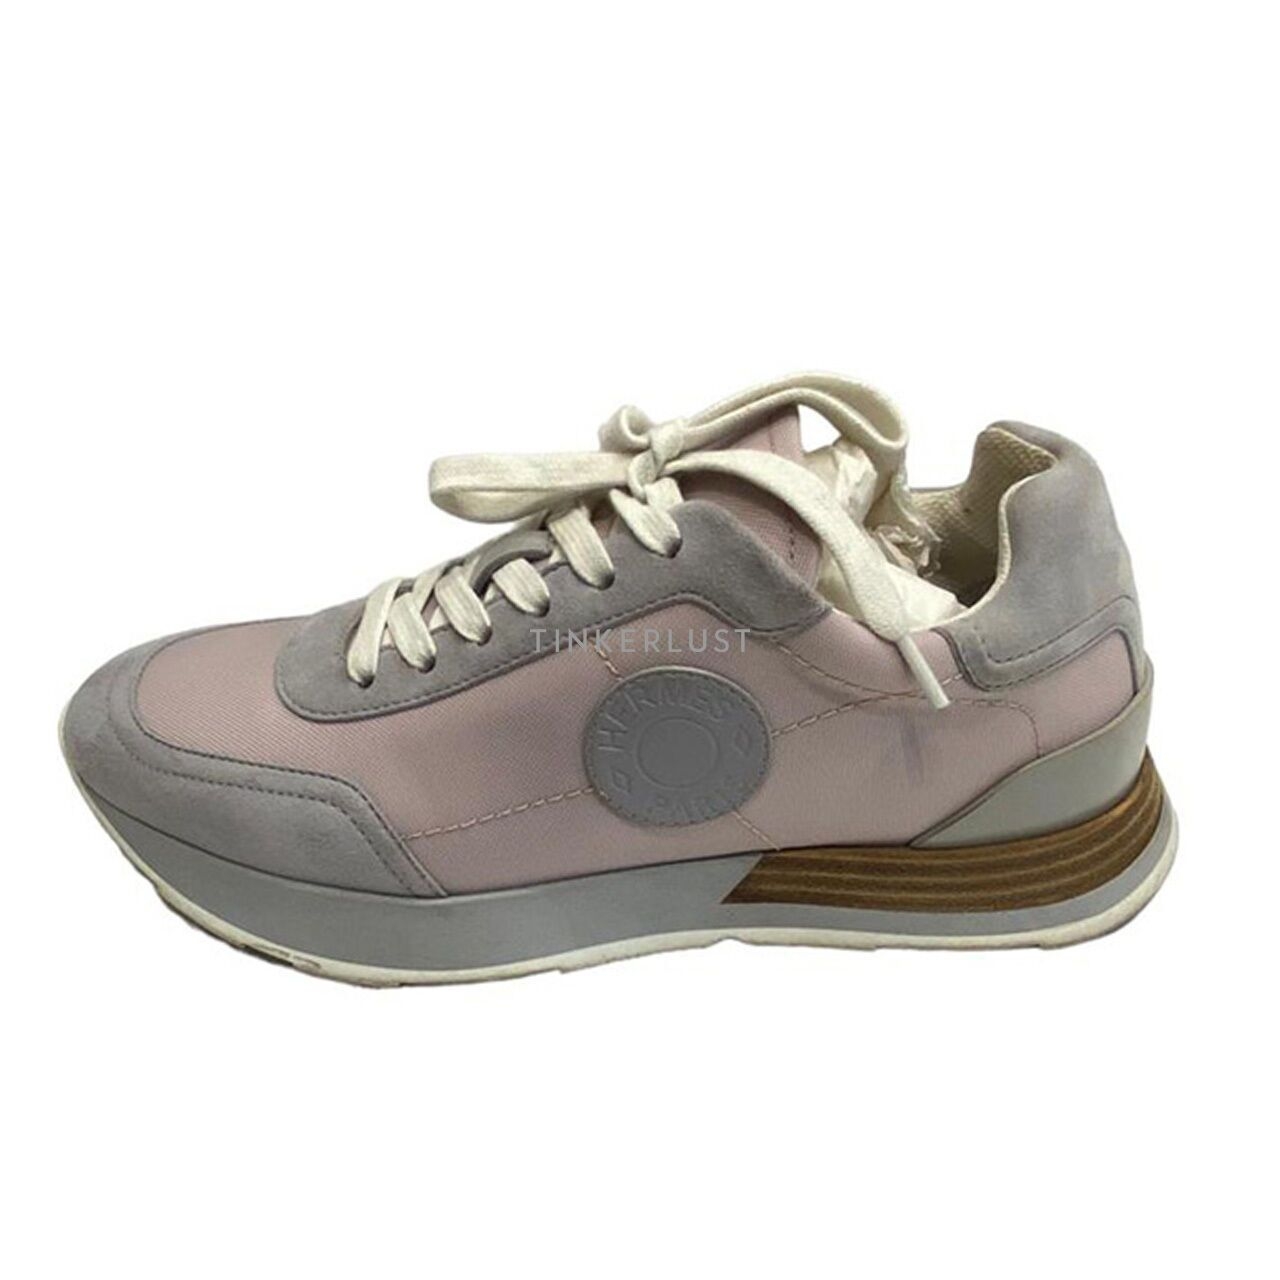 Hermes Drive Lilac Grey Sneakers